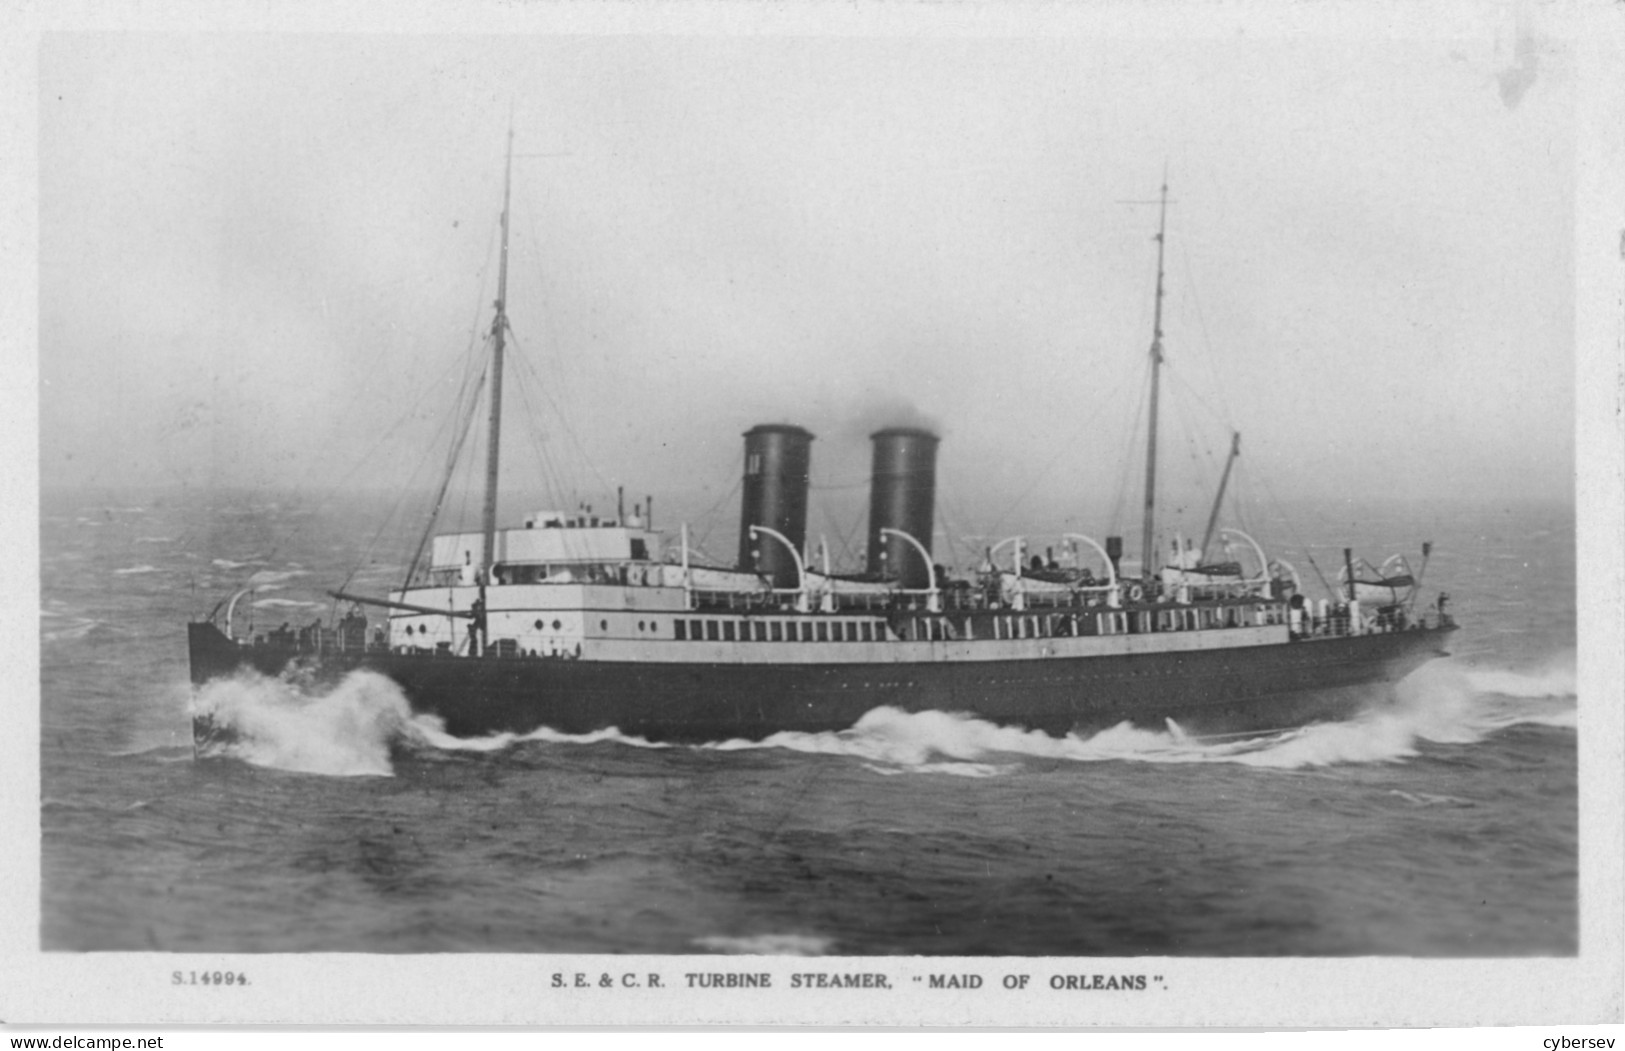 S.E. & C.R. Turbine Steamer "Maid Of Orleans" - Dampfer